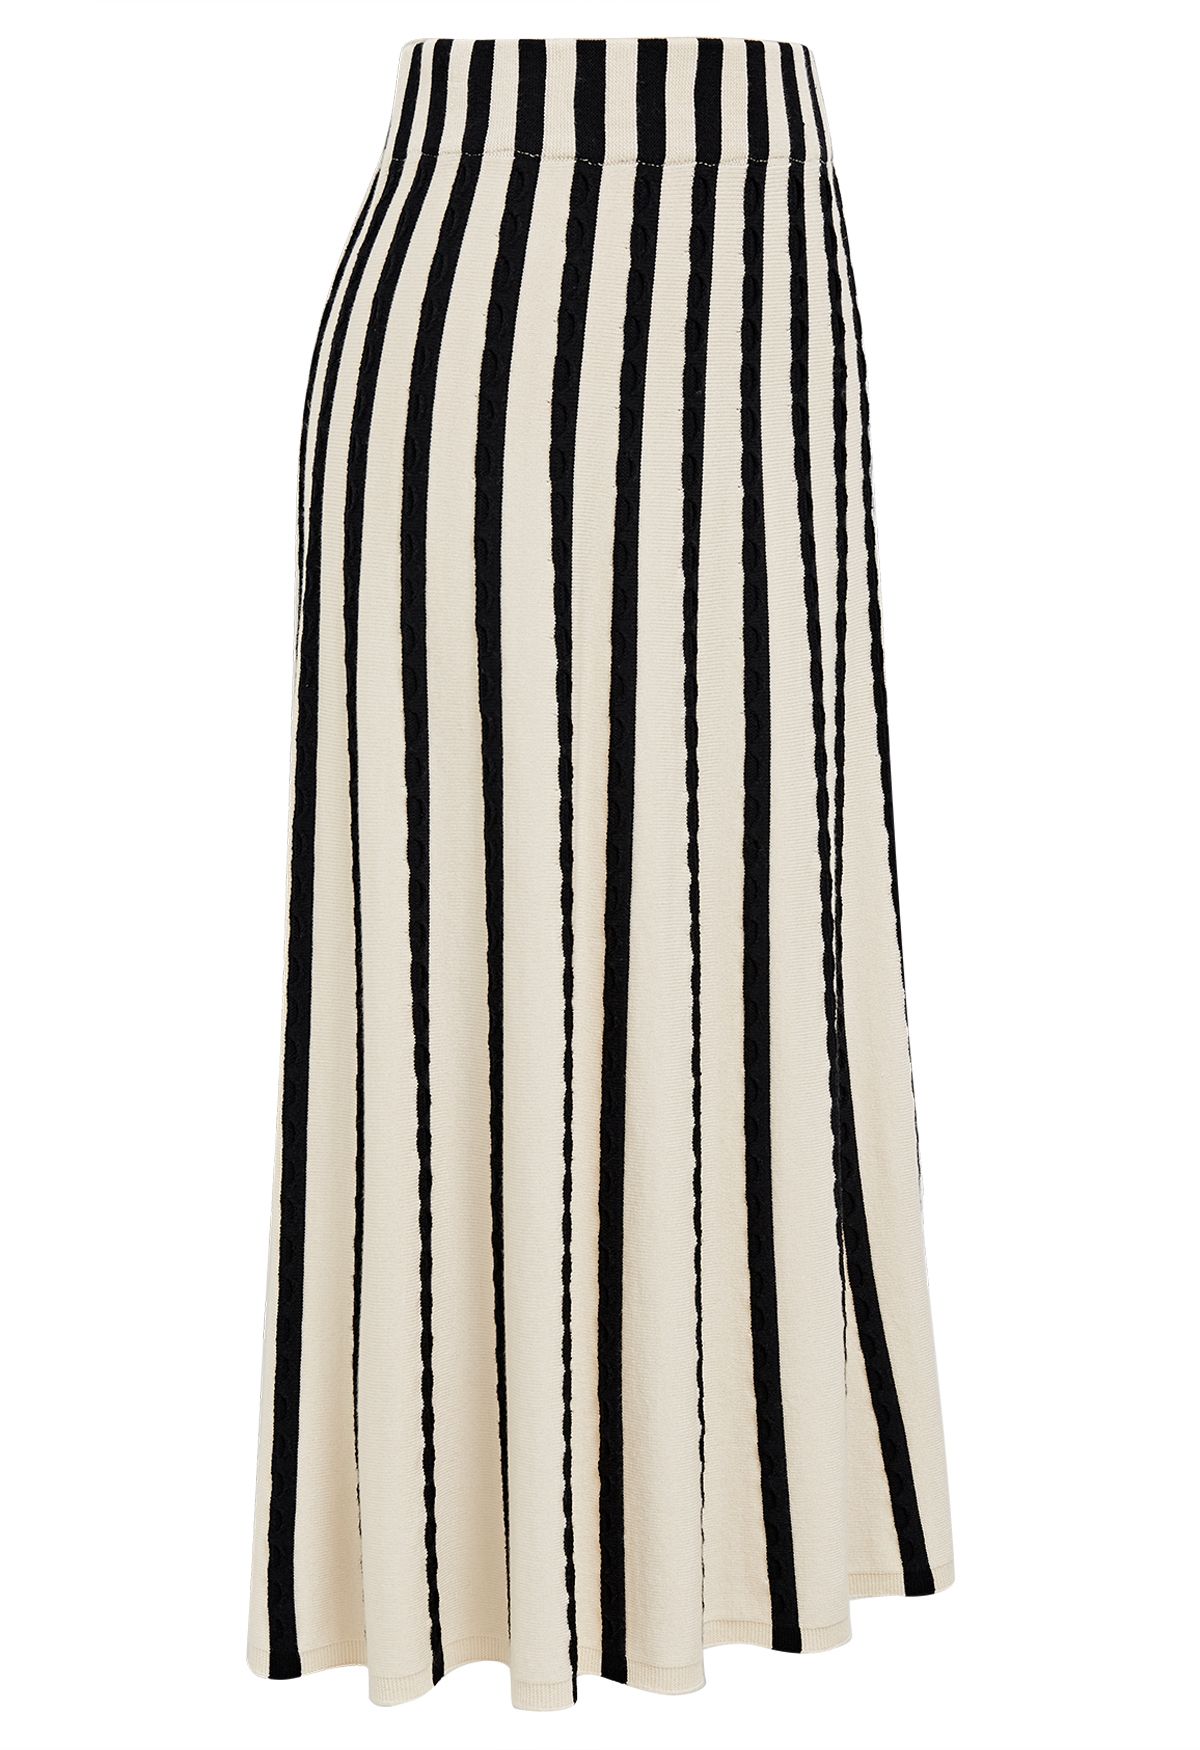 Zebra Stripe Wavy Texture Knit Skirt in Ivory